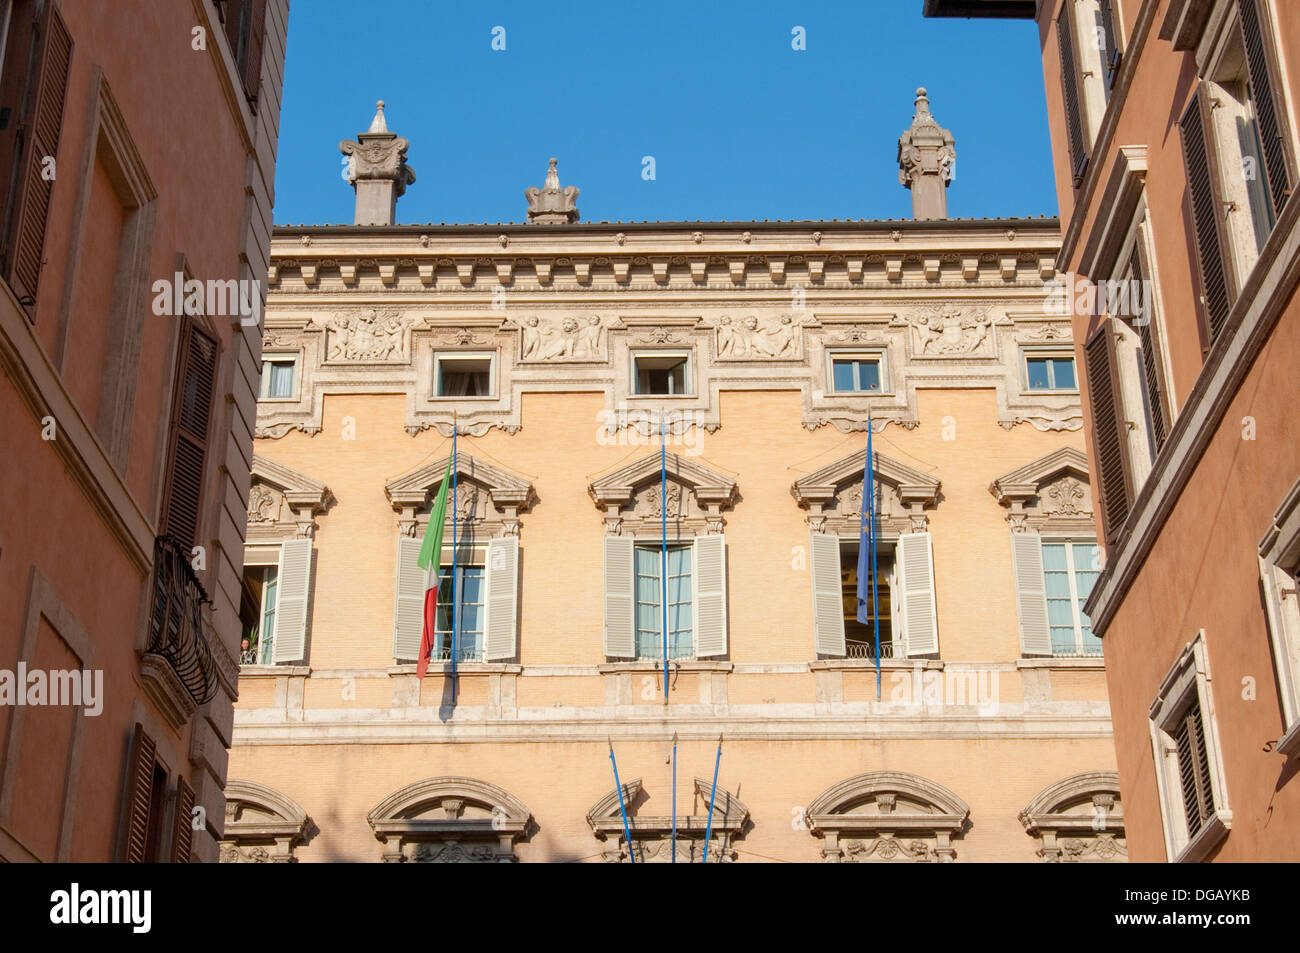 Government building facade in Rome Italy Stock Photo